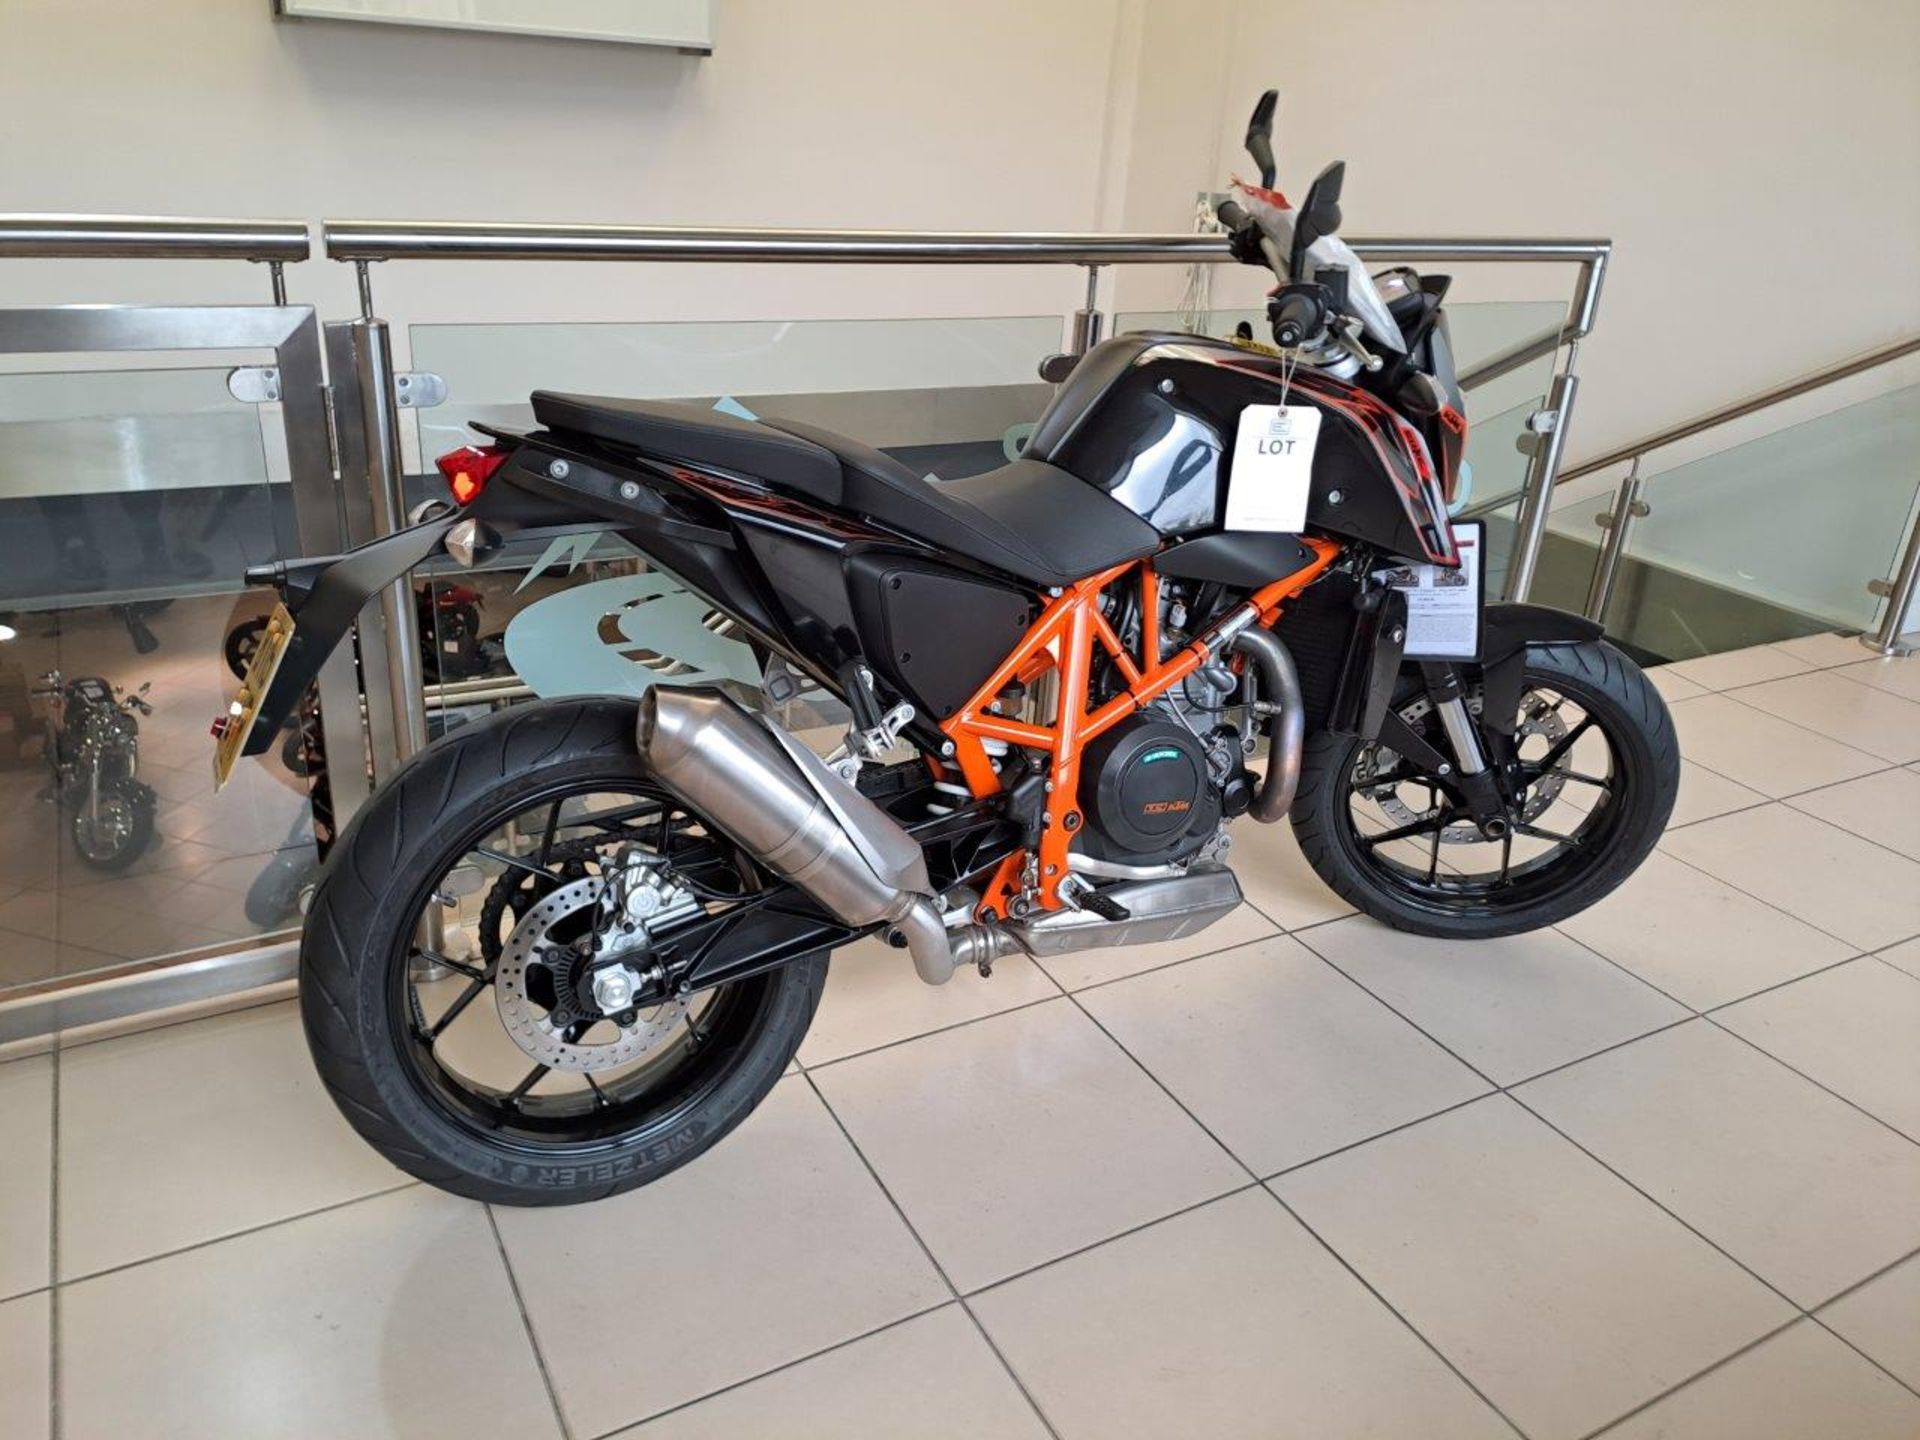 KTM Duke 690 Motorbike (May 2015) - Image 5 of 18